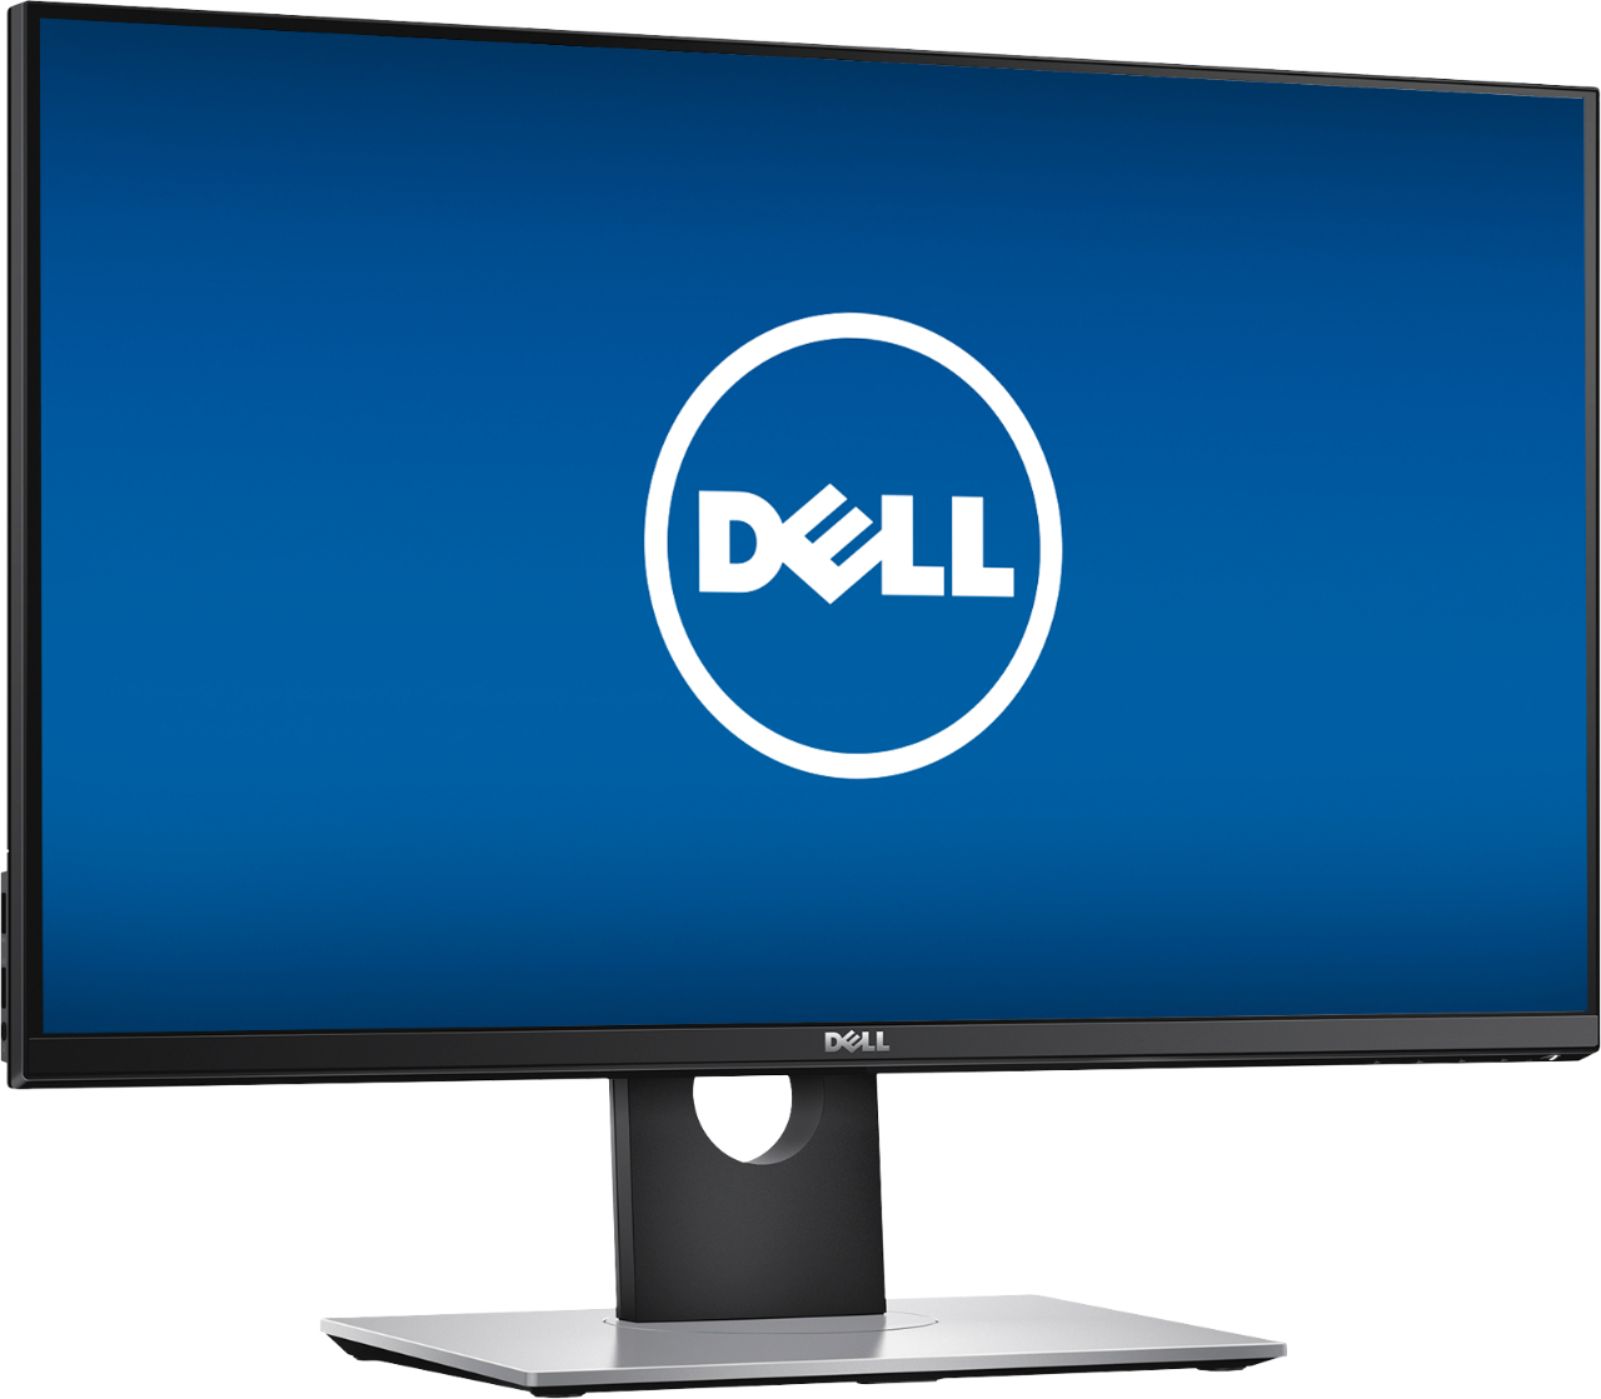 Angle View: Dell - Refurbished S2716DG 27" LED QHD G-SYNC Monitor - Black